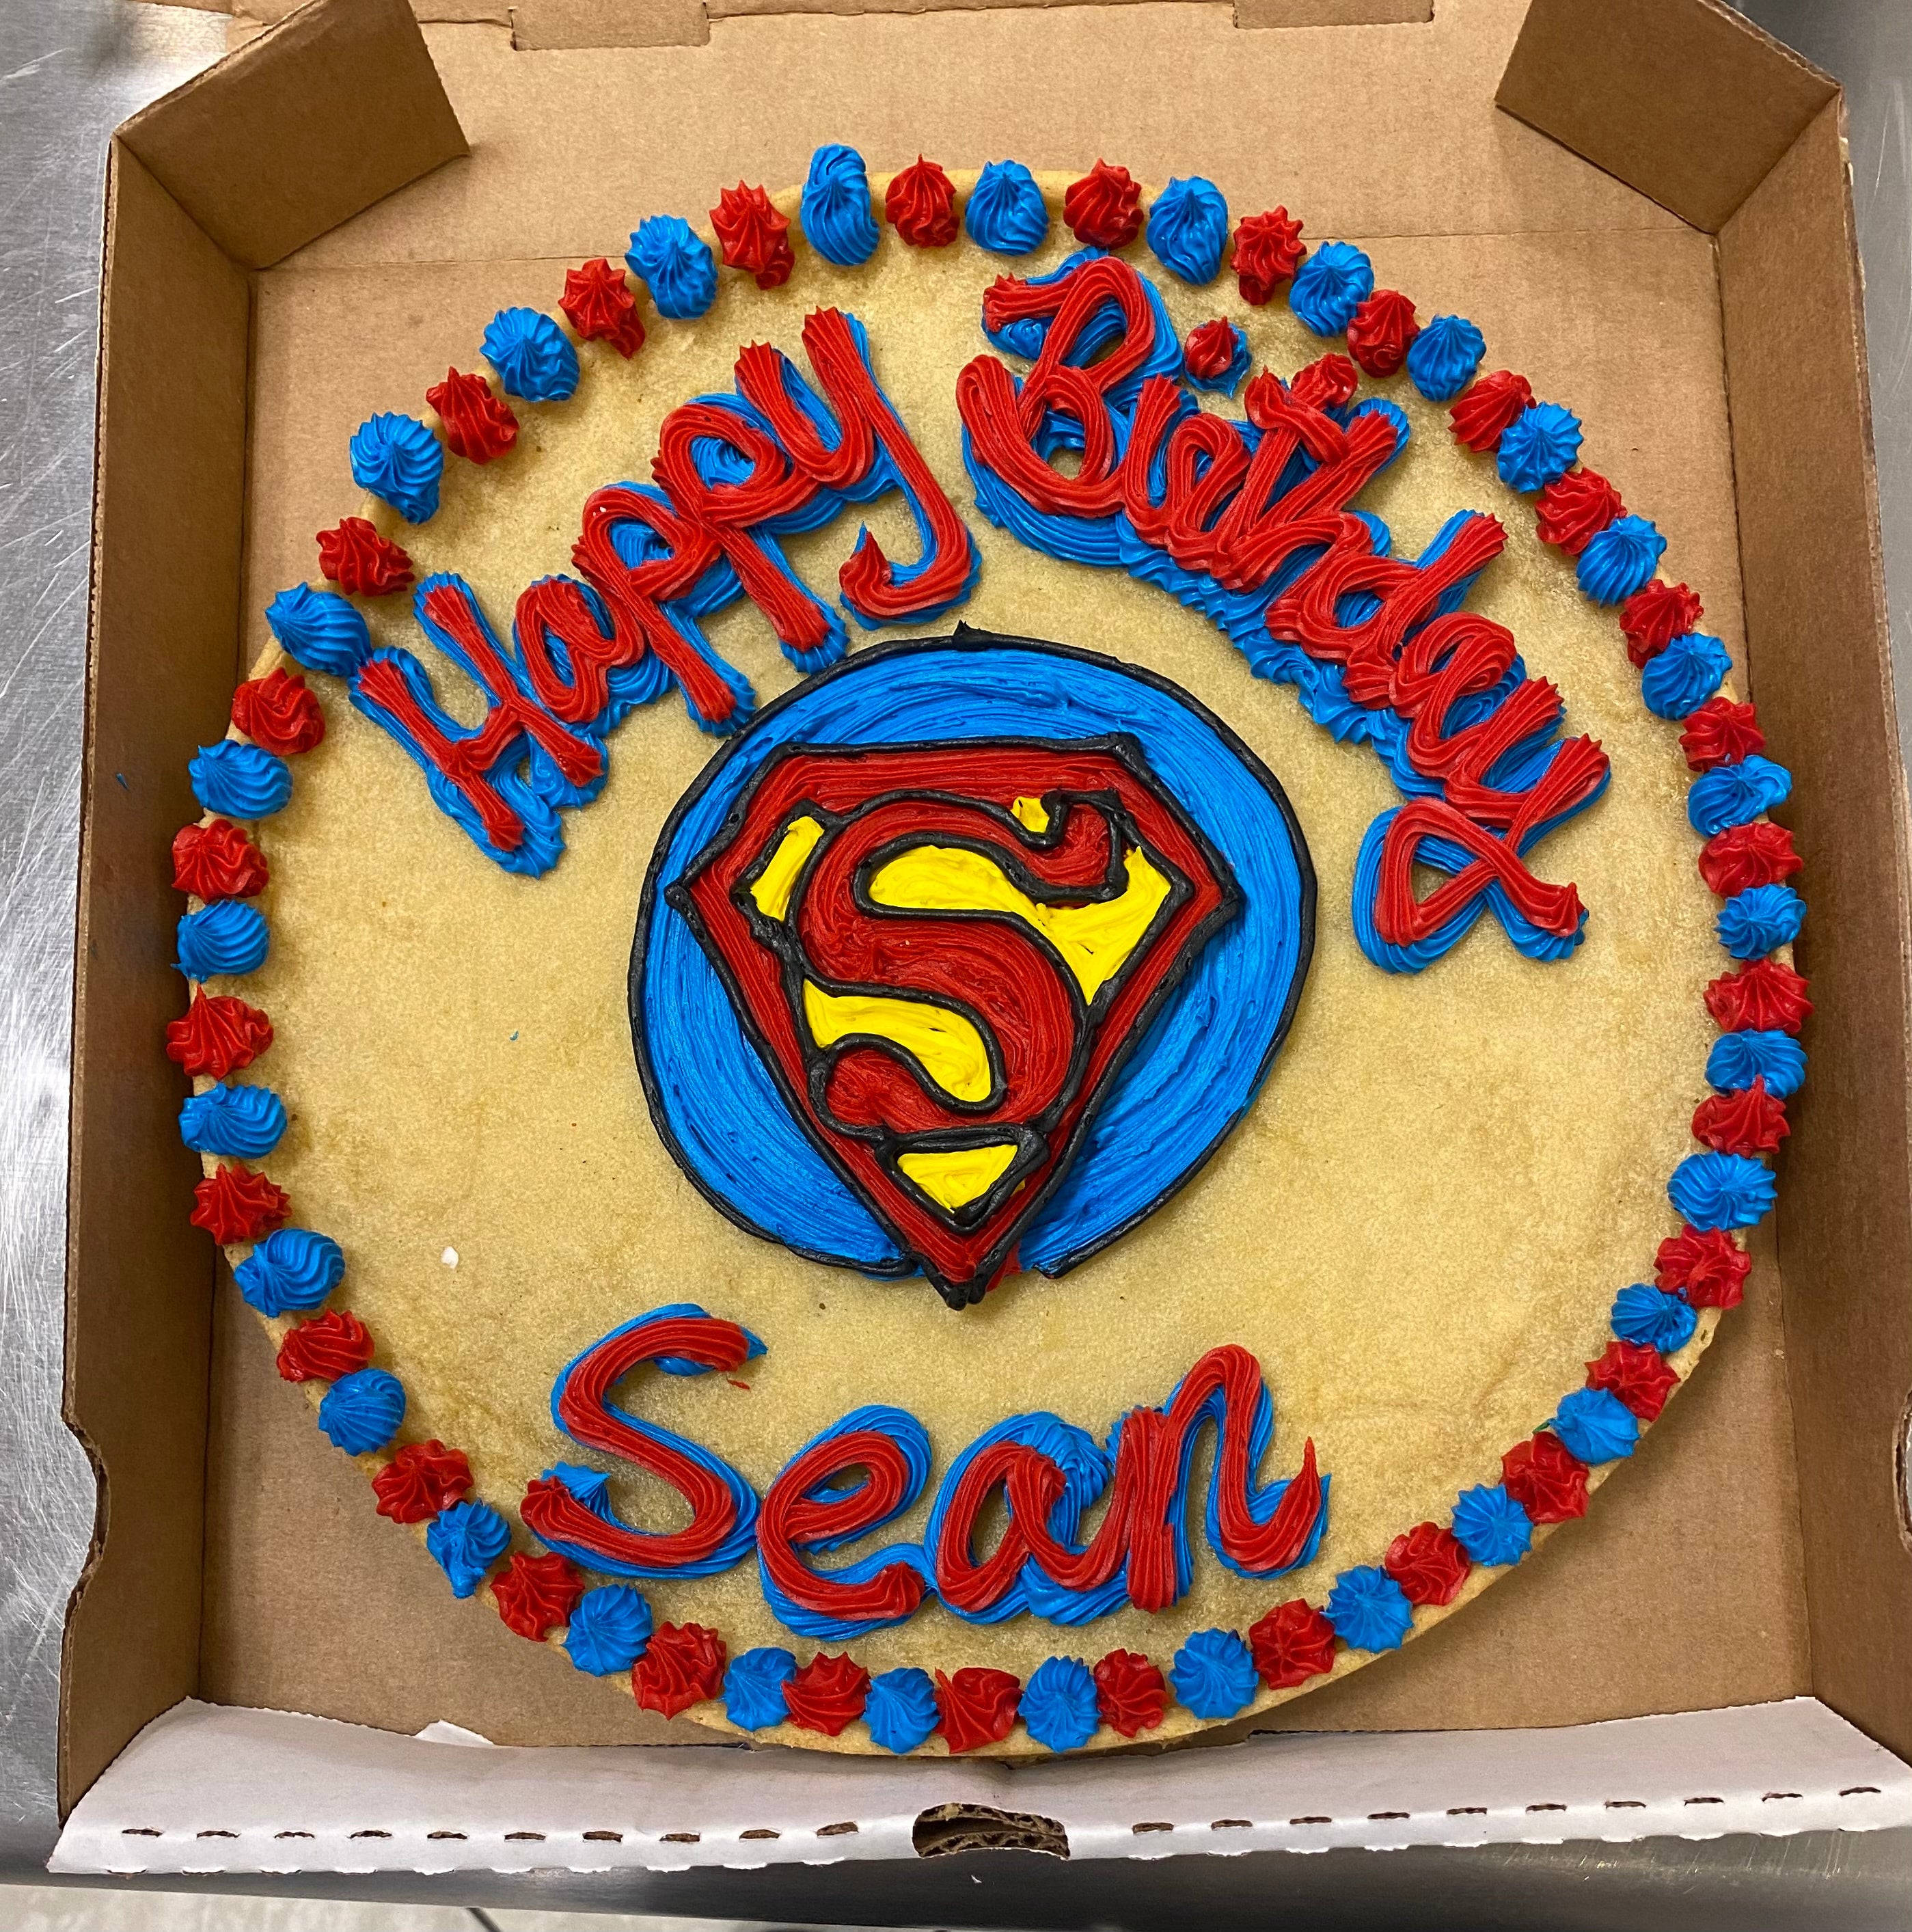 Cakes, Birthday Cake, Supermen, Birthdays, and Cookies image inspiration on  Designspiration